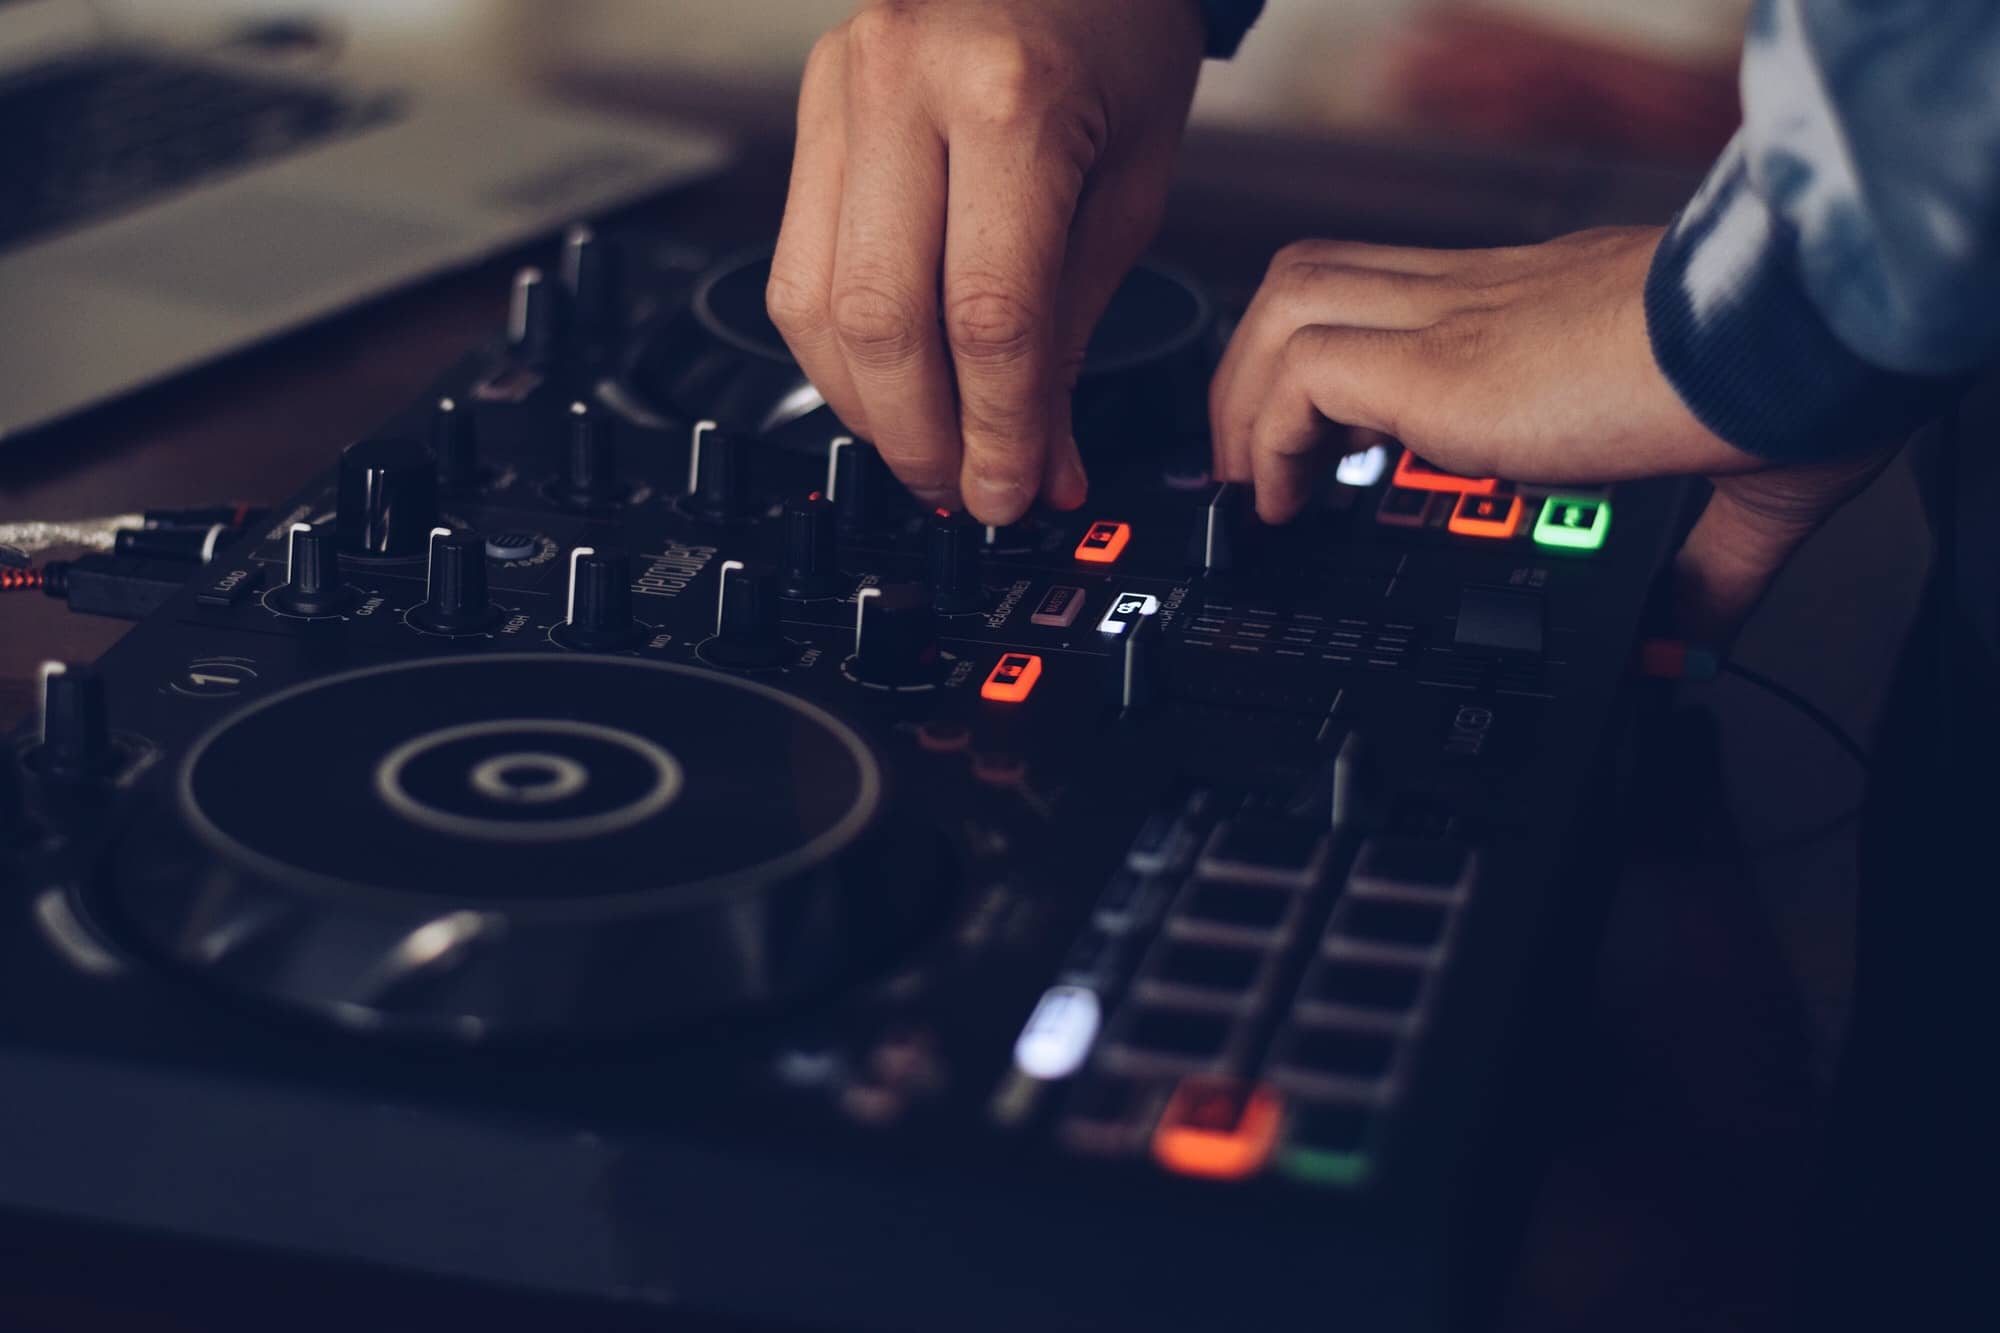 DJ mixing music on a digital turntable